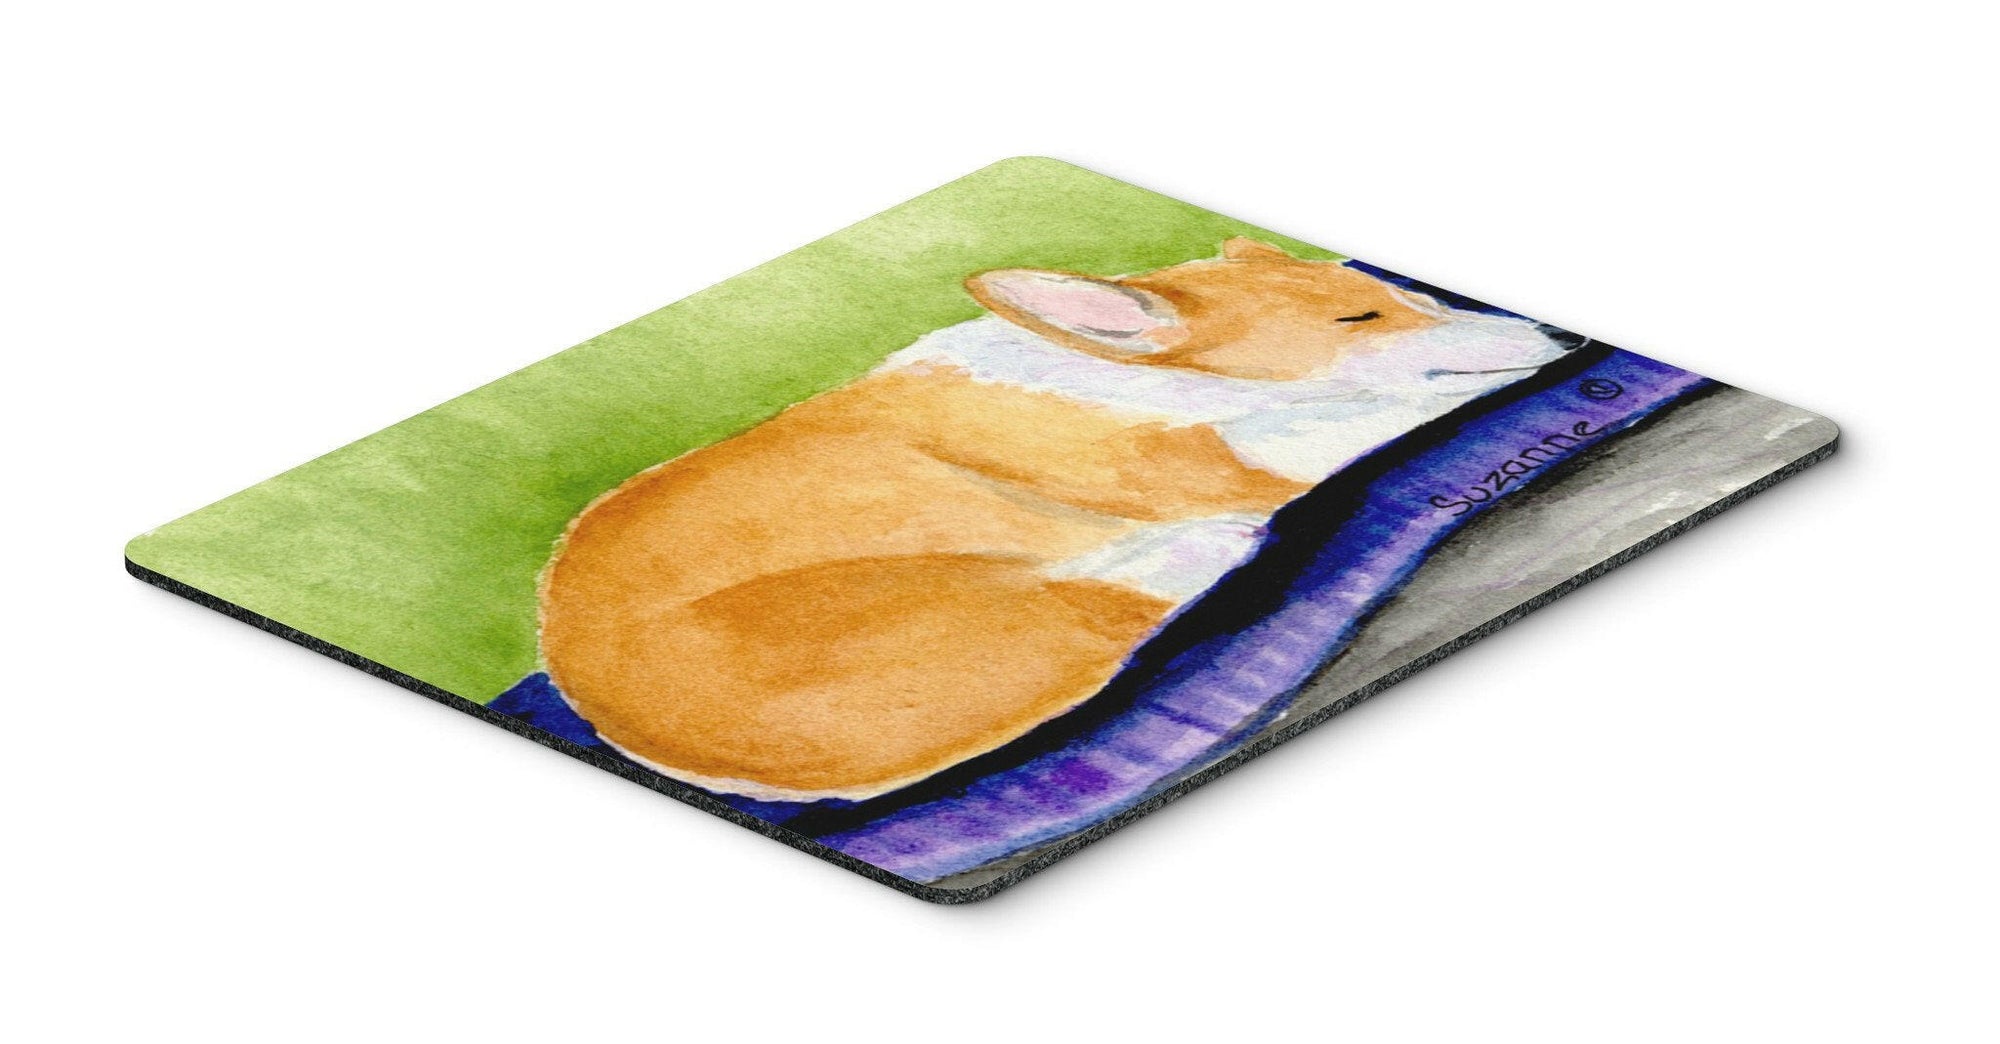 Corgi Mouse pad, hot pad, or trivet by Caroline's Treasures